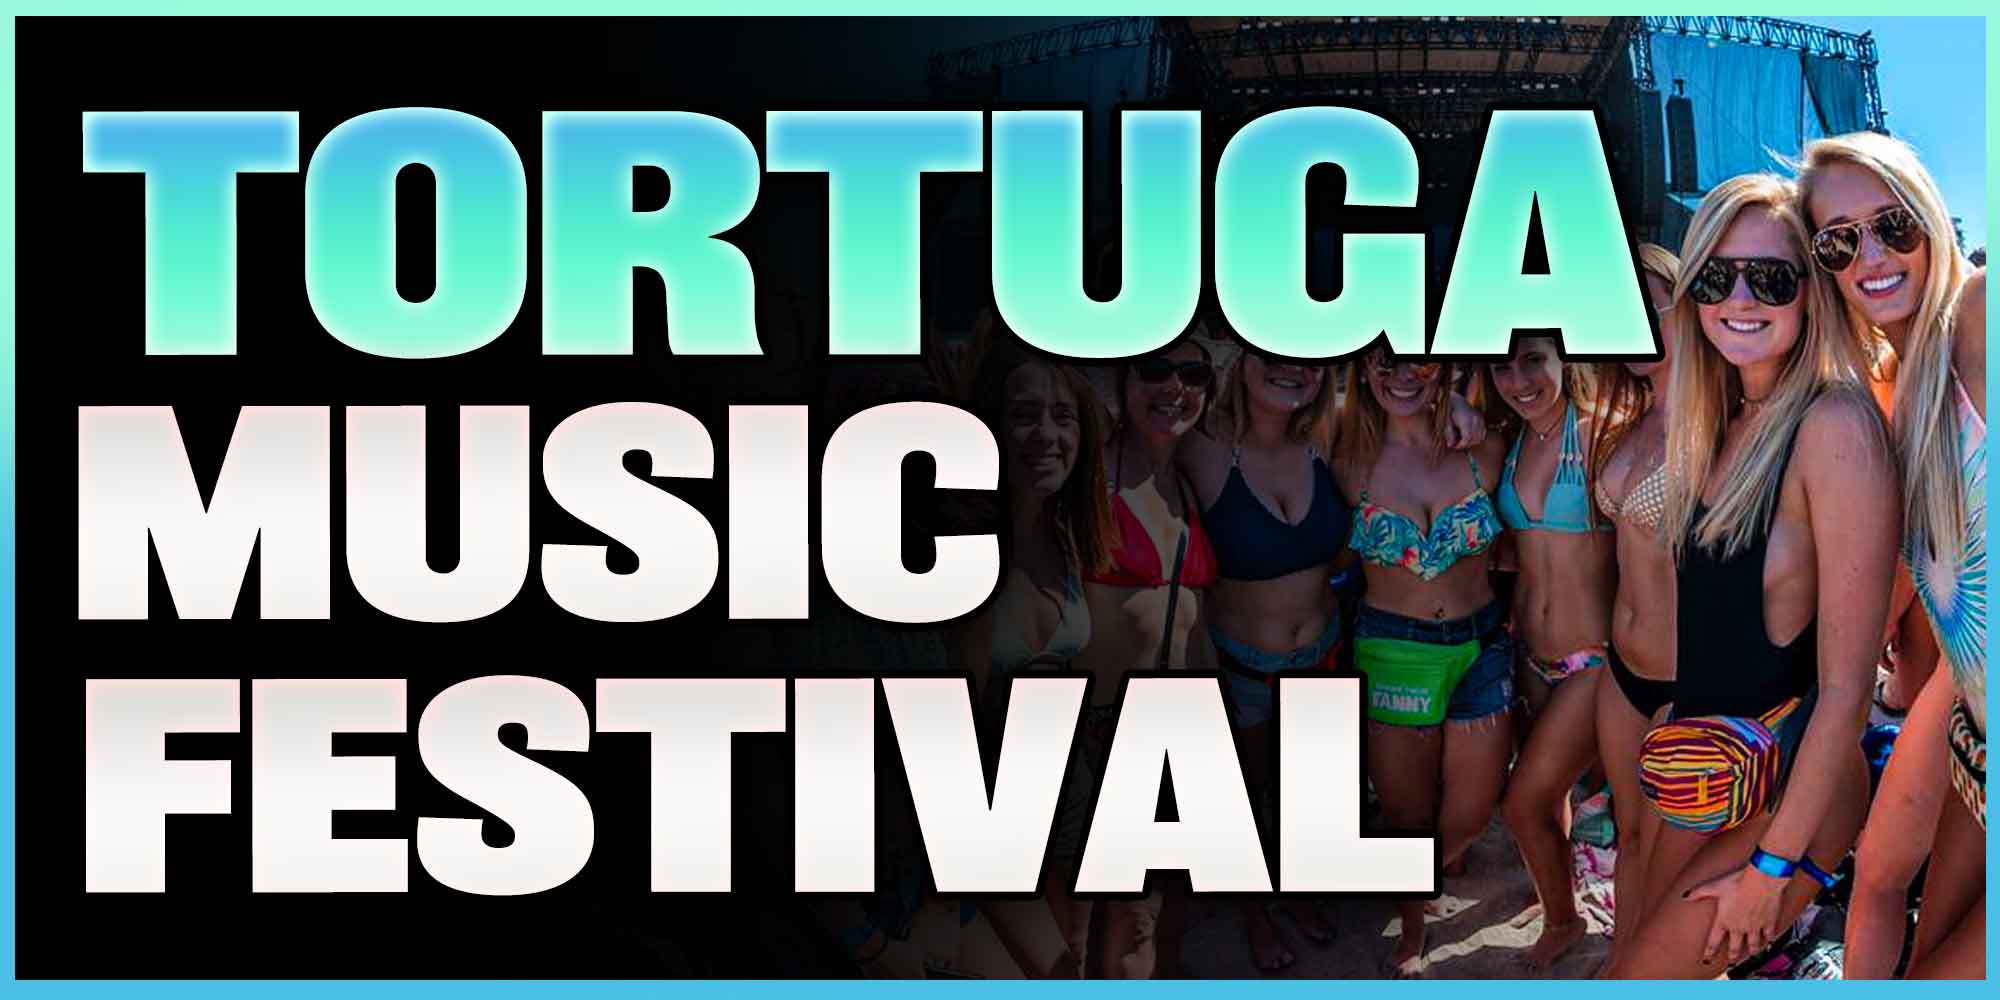 Tortuga Music Festival (Tickets + Info!)